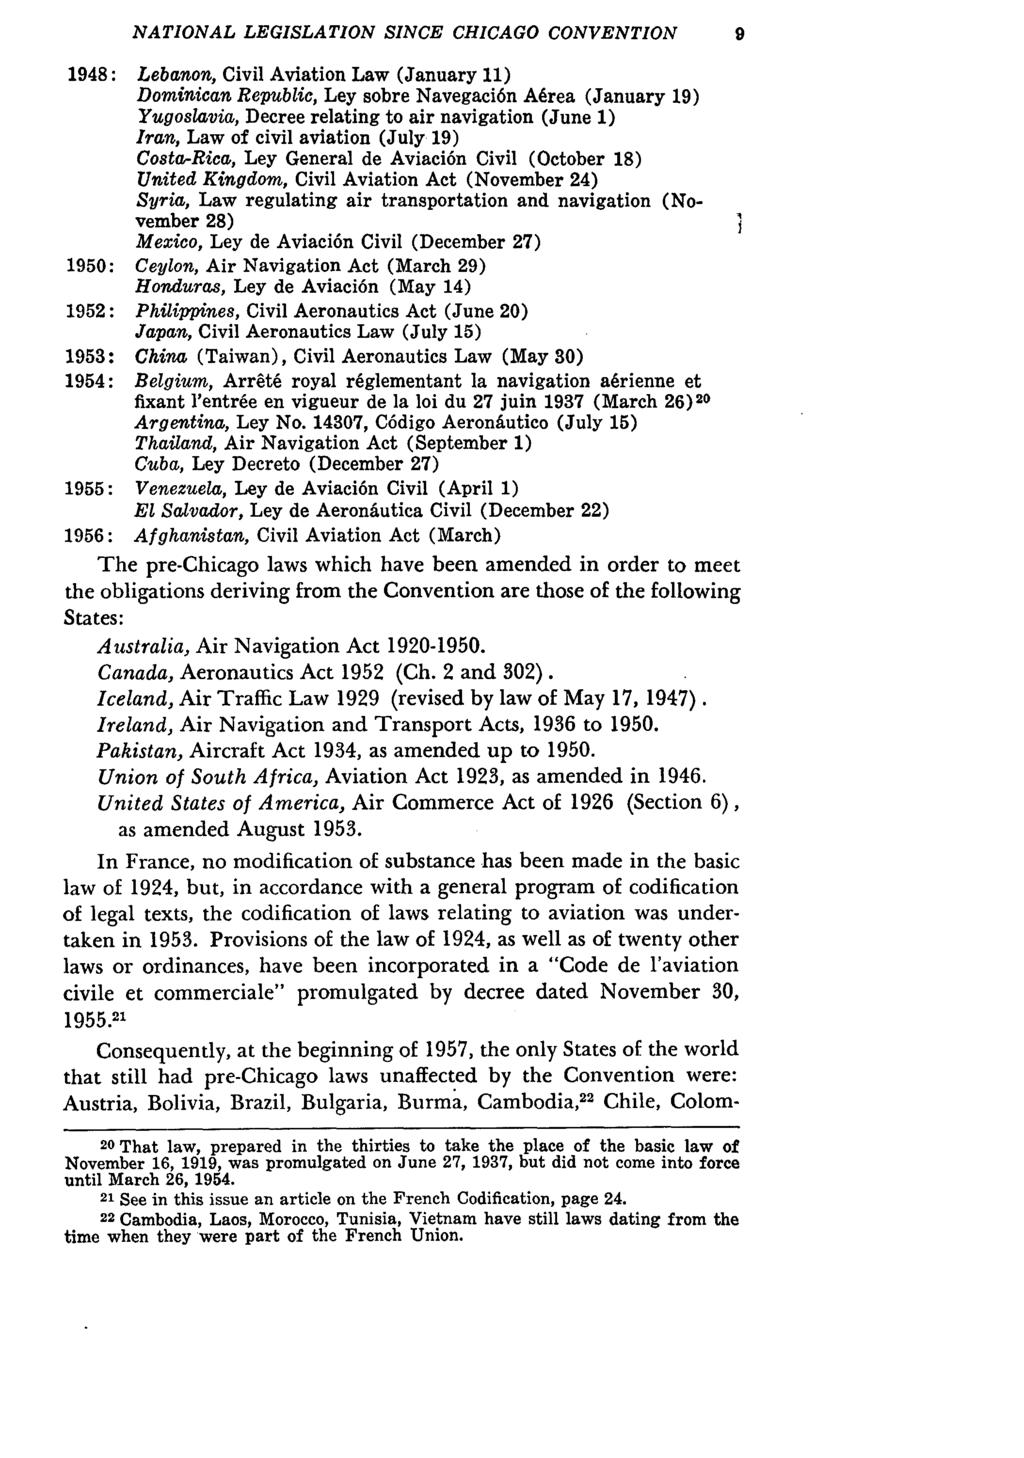 NATIONAL LEGISLATION SINCE CHICAGO CONVENTION 9 1948: Lebanon, Civil Aviation Law (January 11) Dominican Republic, Ley sobre Navegaci6n A6rea (January 19) Yugoslavia, Decree relating to air